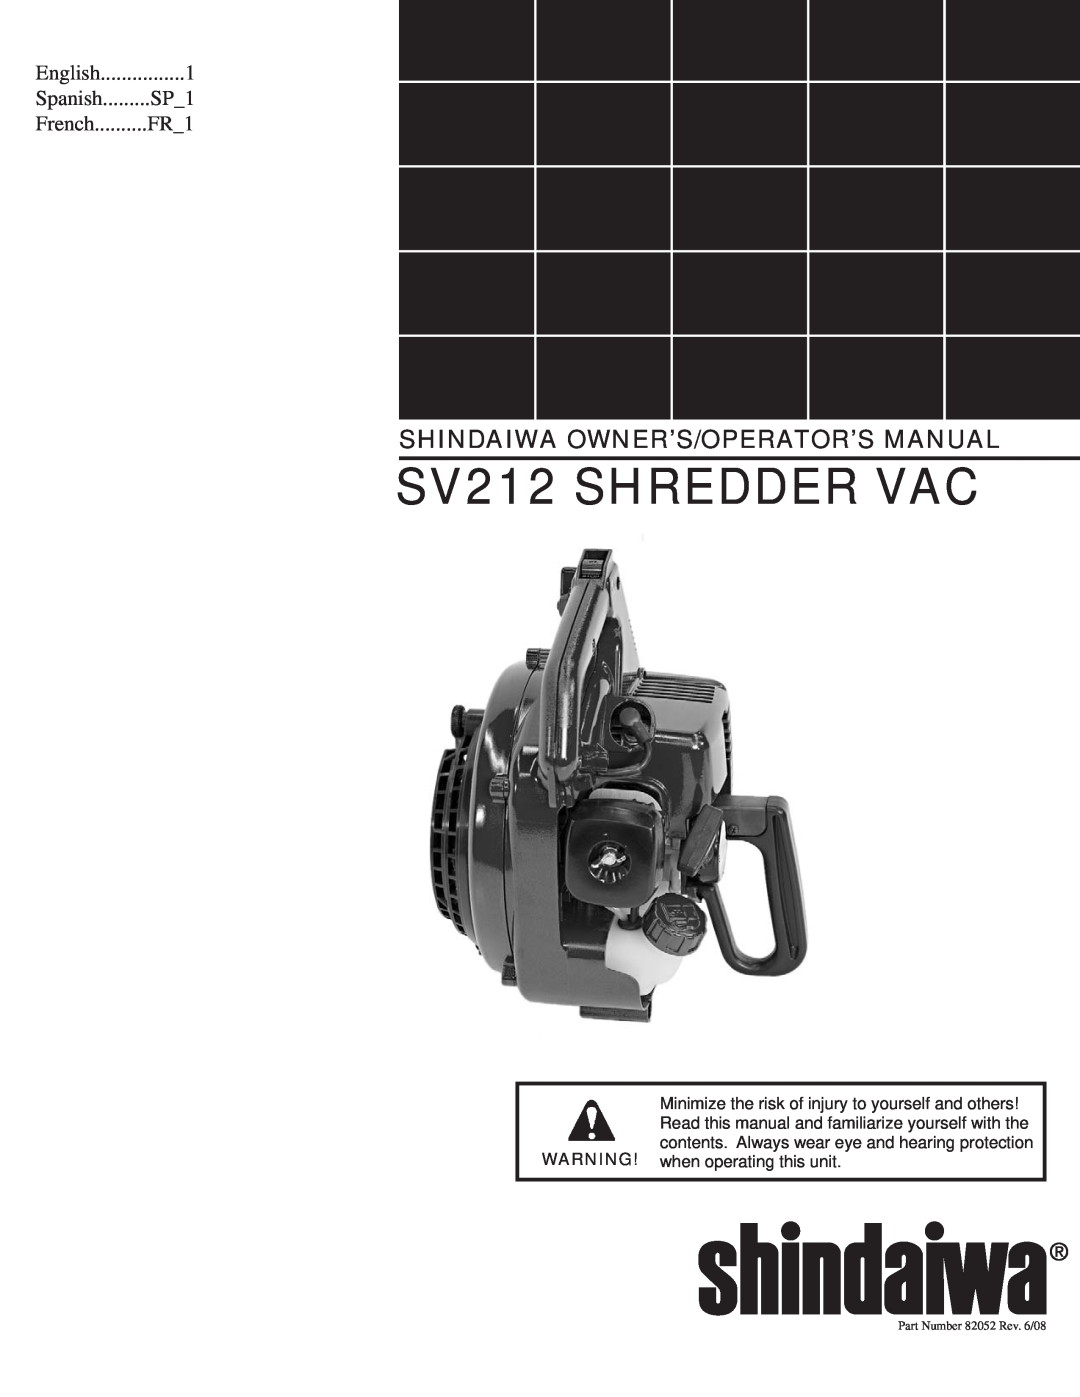 Shindaiwa 82052 manual SV212 SHREDDER VAC, Shindaiwa Owner’S/Operator’S Manual, WARNING! when operating this unit, Spanish 